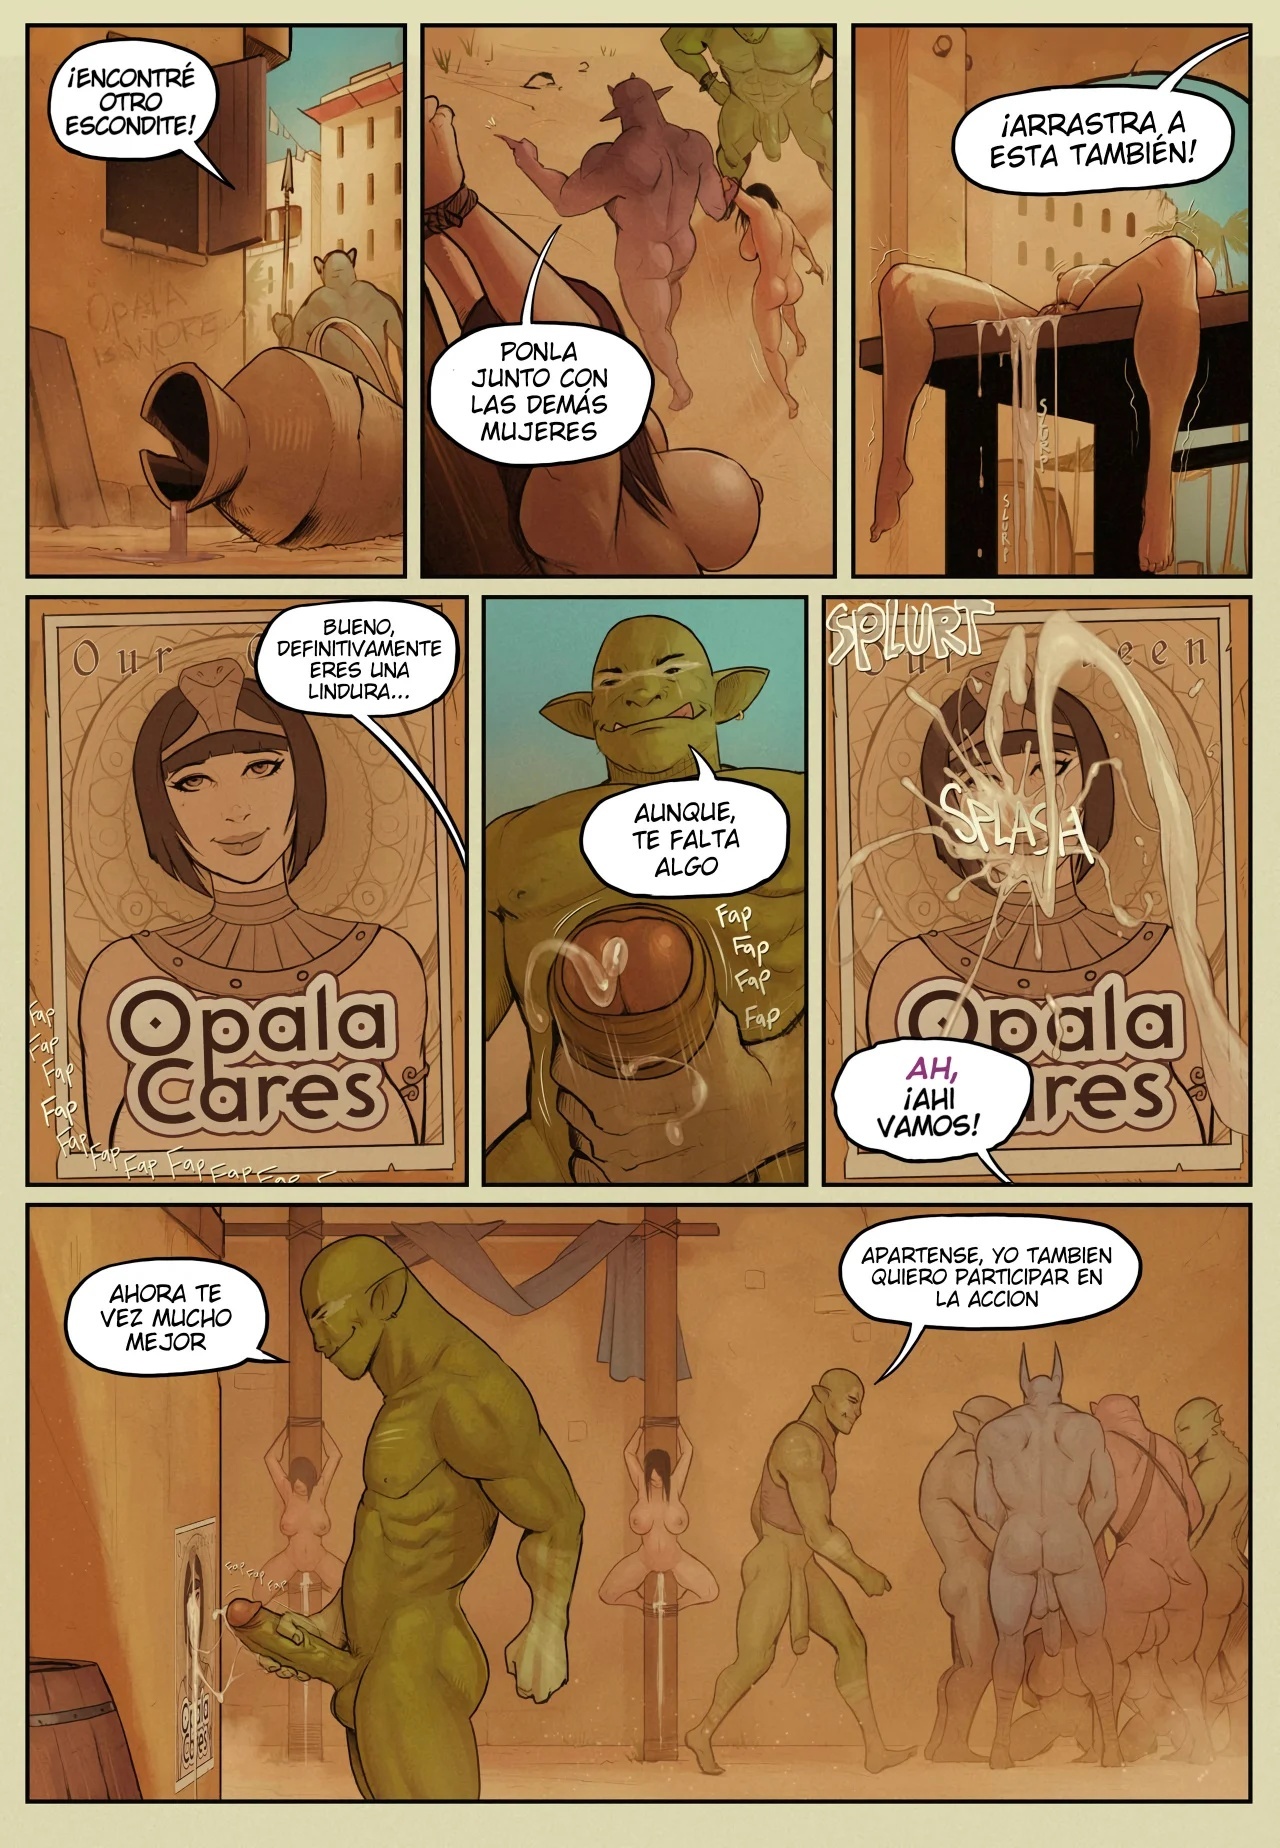 4 - Legend of Queen Opala -Tales of Opala IN THE SHADOW OF ANUBIS III PART II - 2